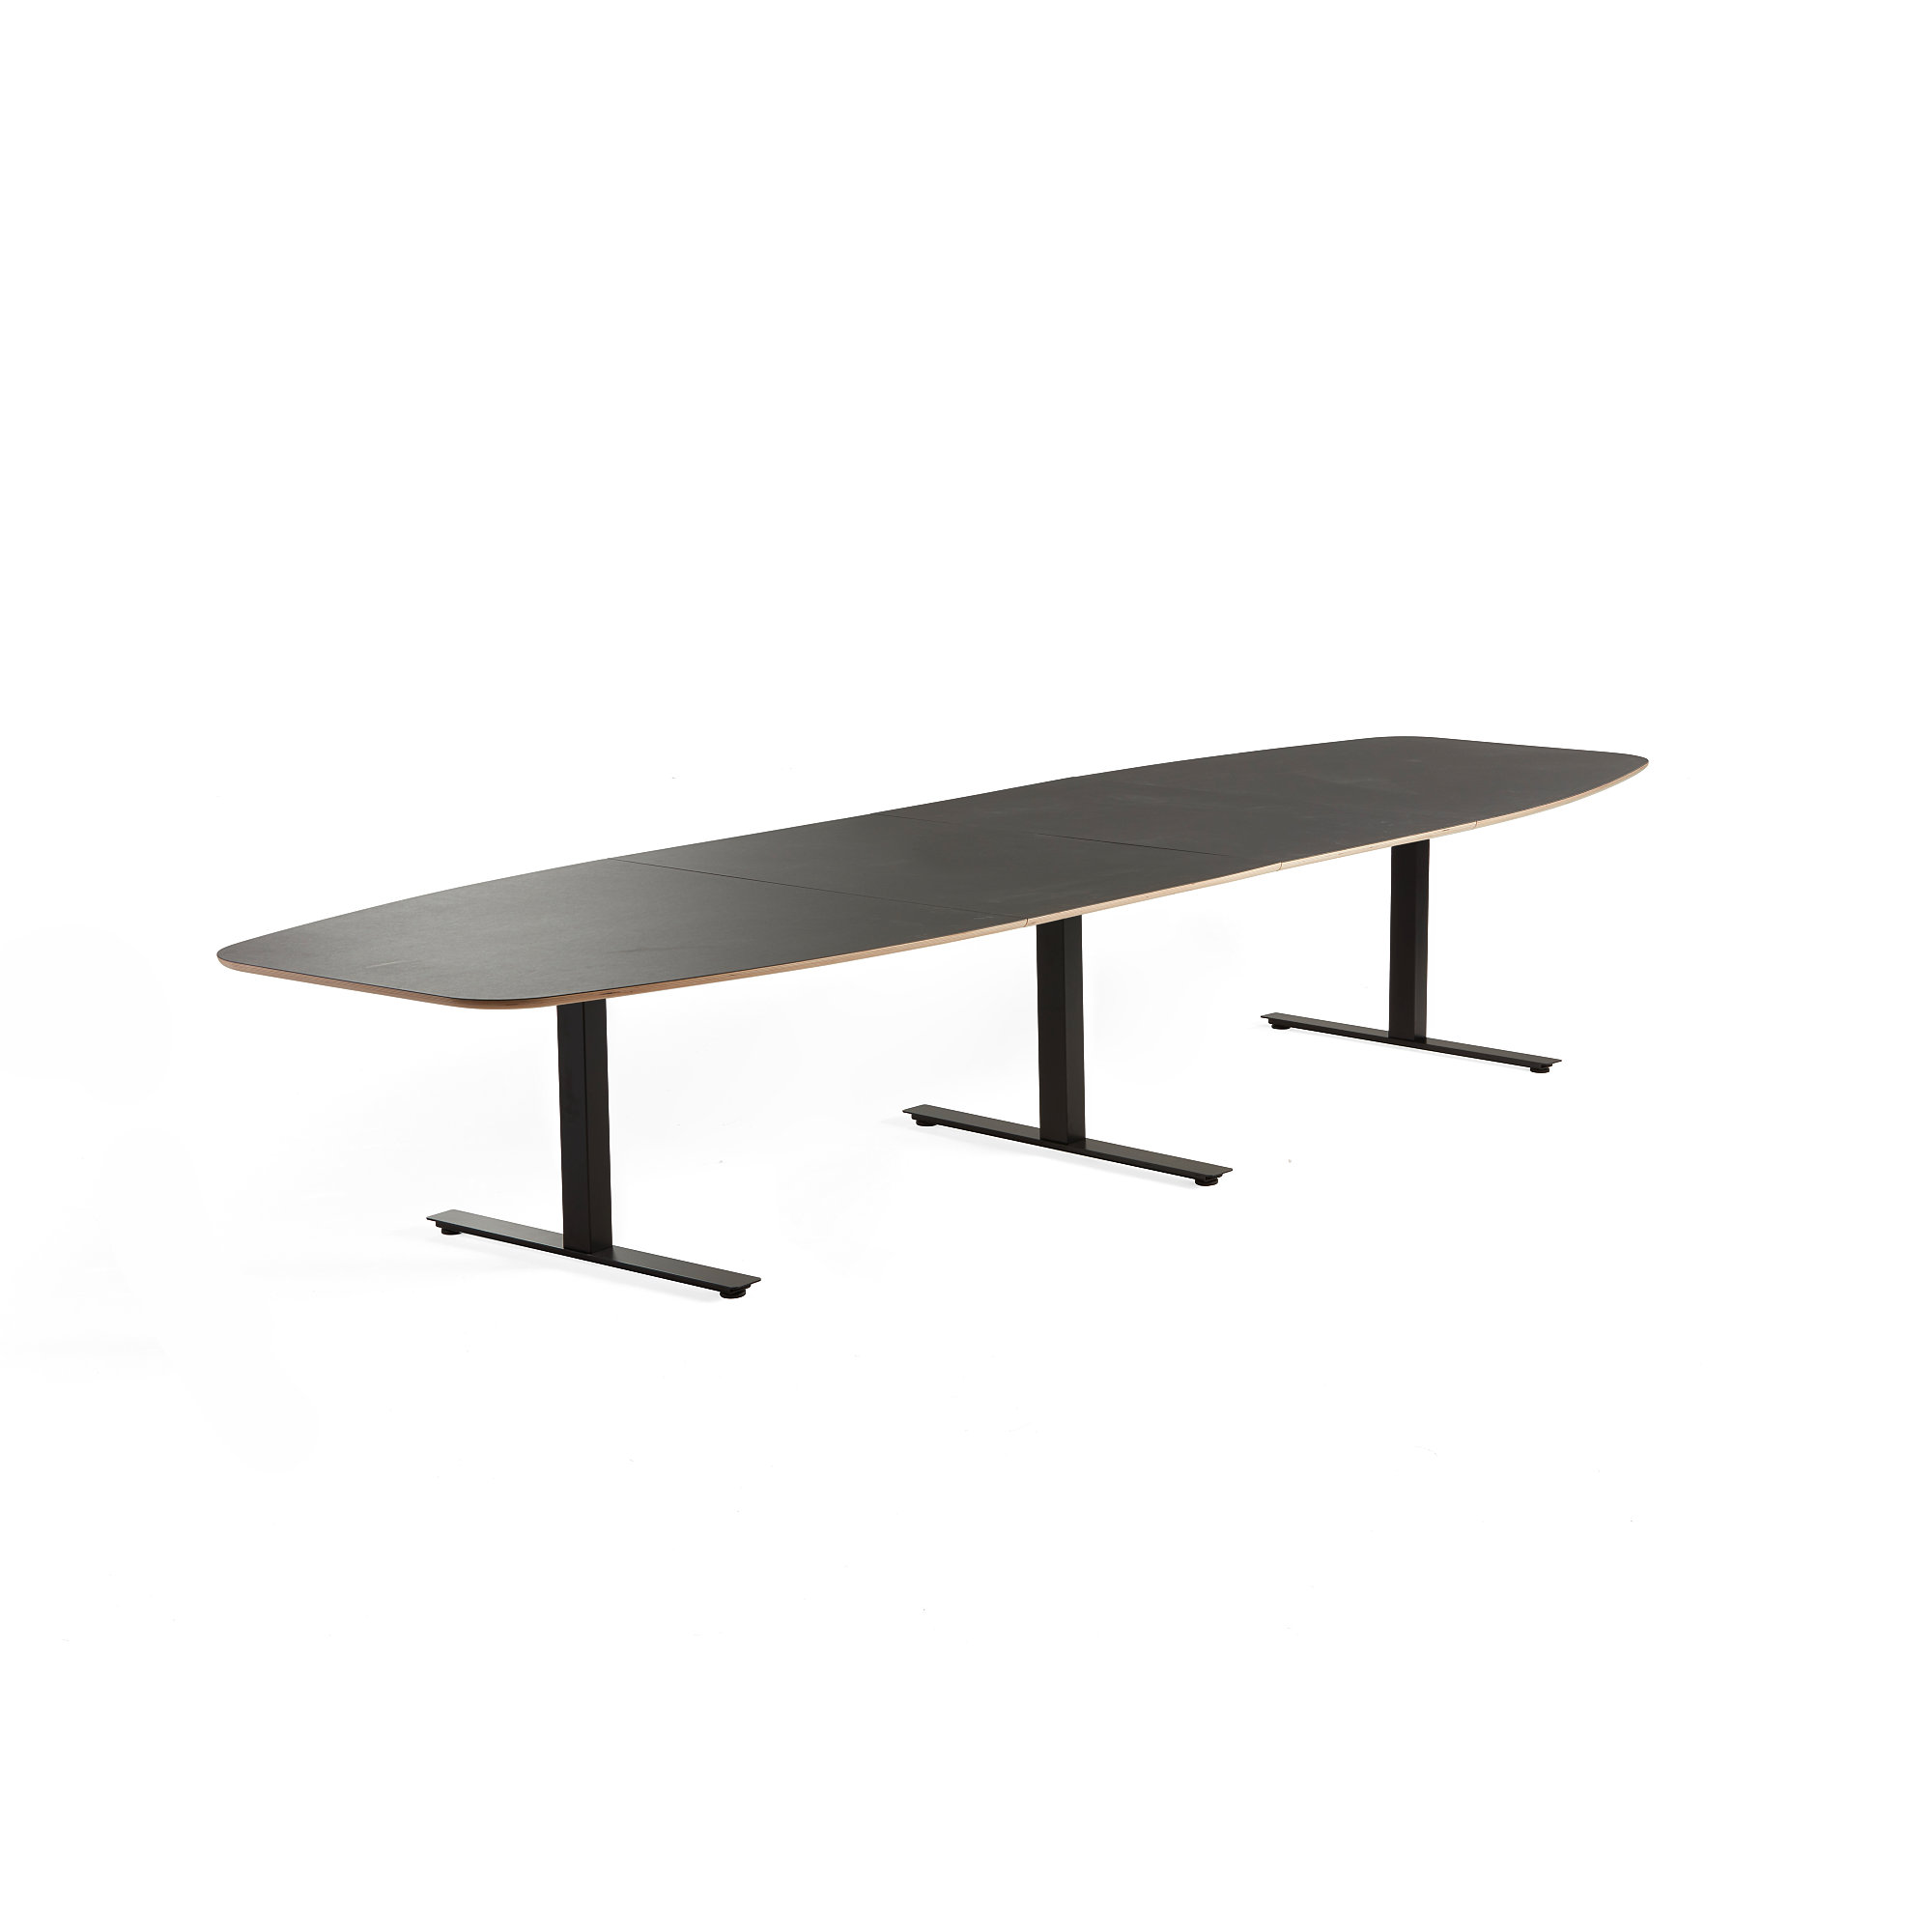 Rokovací stôl AUDREY, 4000x1200 mm, čierny podstavec, tmavošedá doska